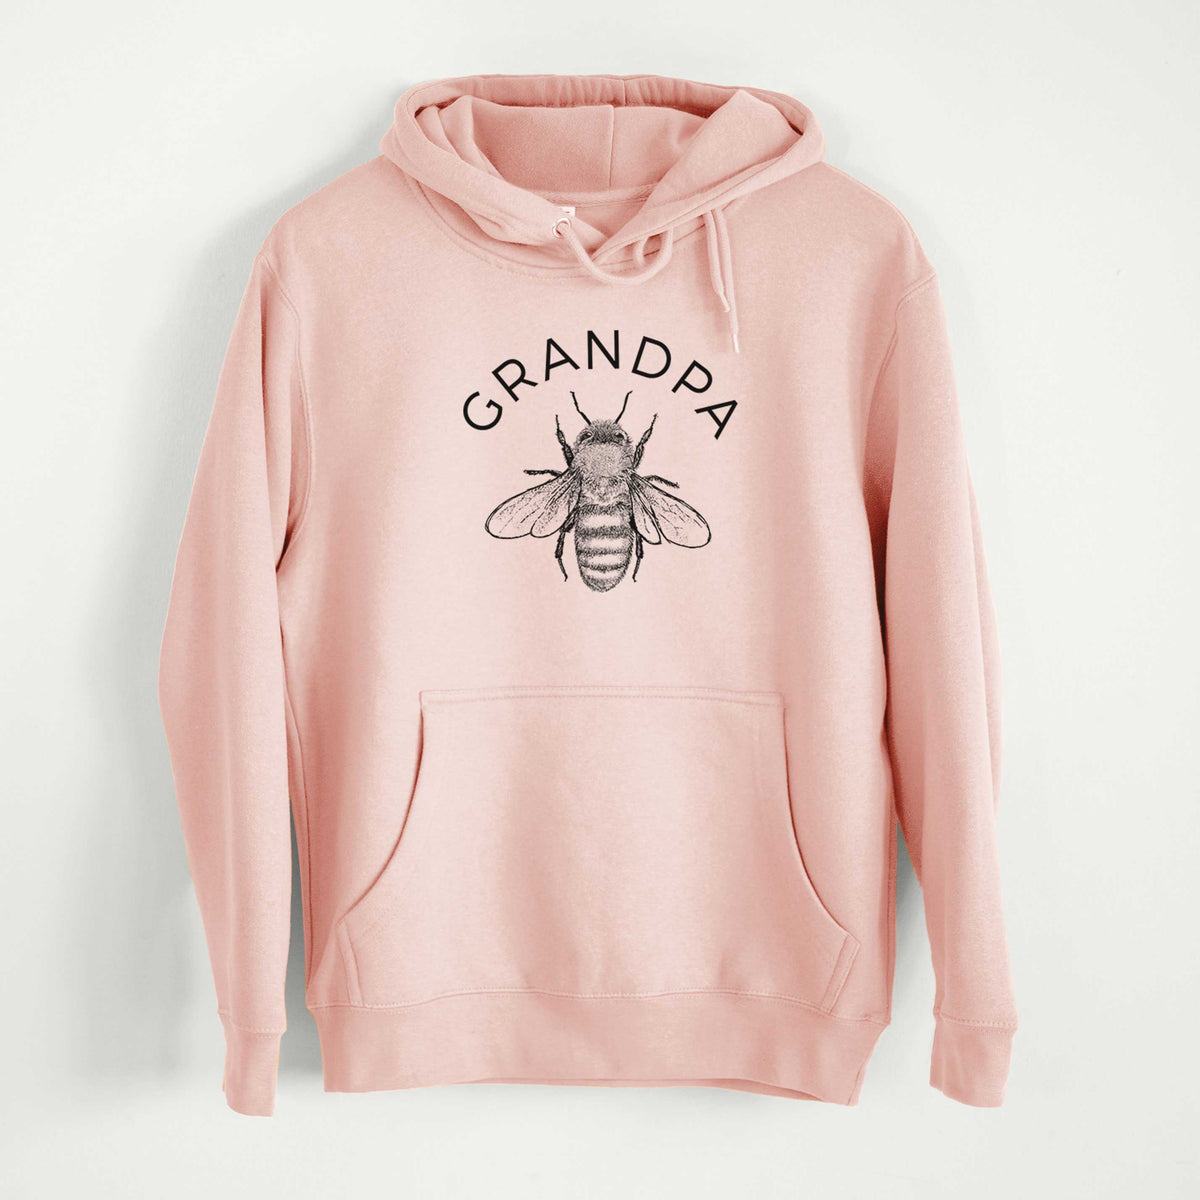 Grandpa Bee  - Mid-Weight Unisex Premium Blend Hoodie